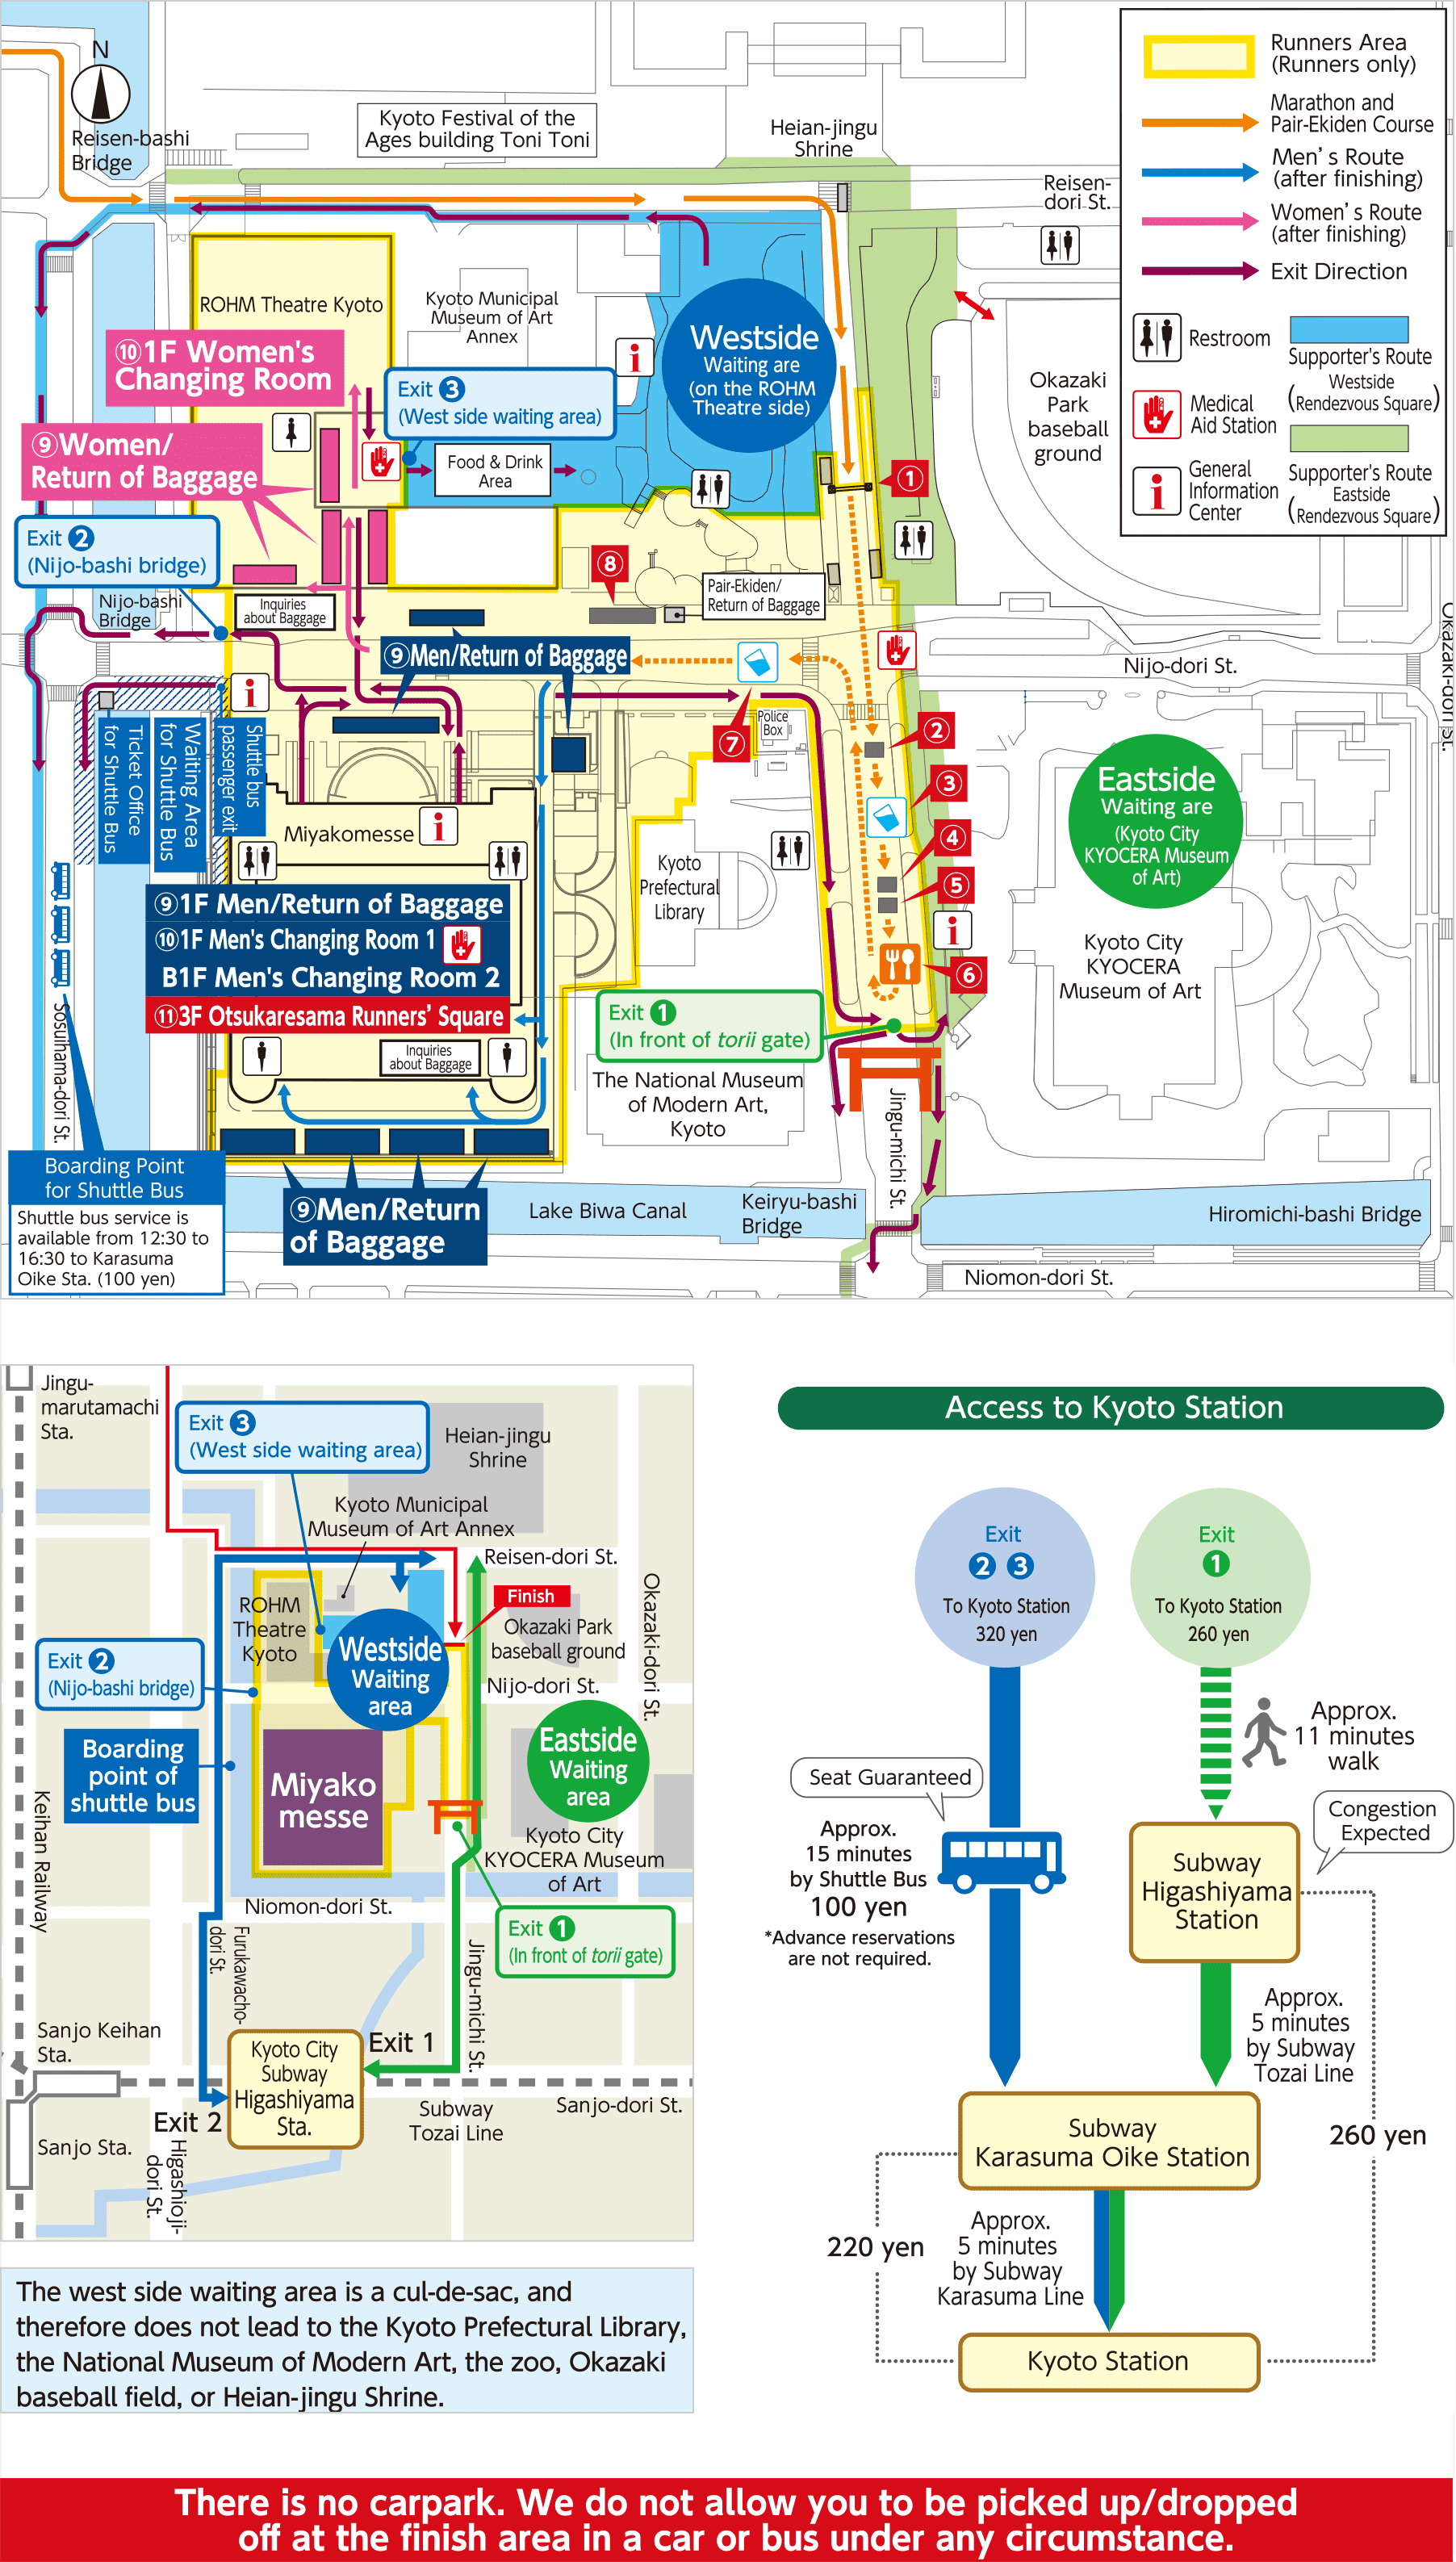 Finish Area: Access & Map